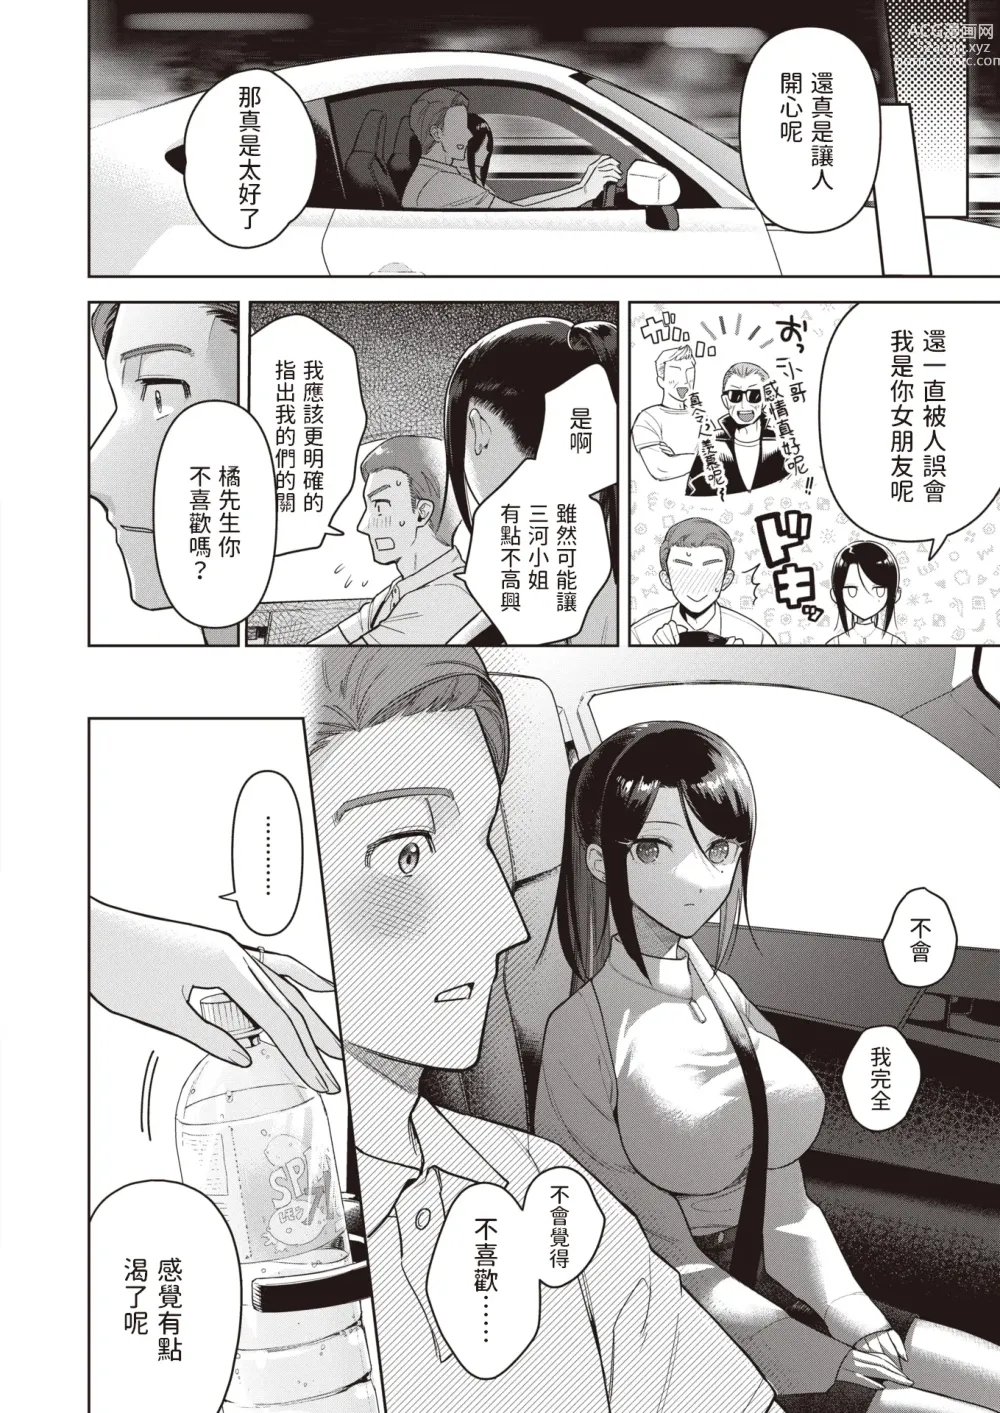 Page 6 of manga Drive me crazy